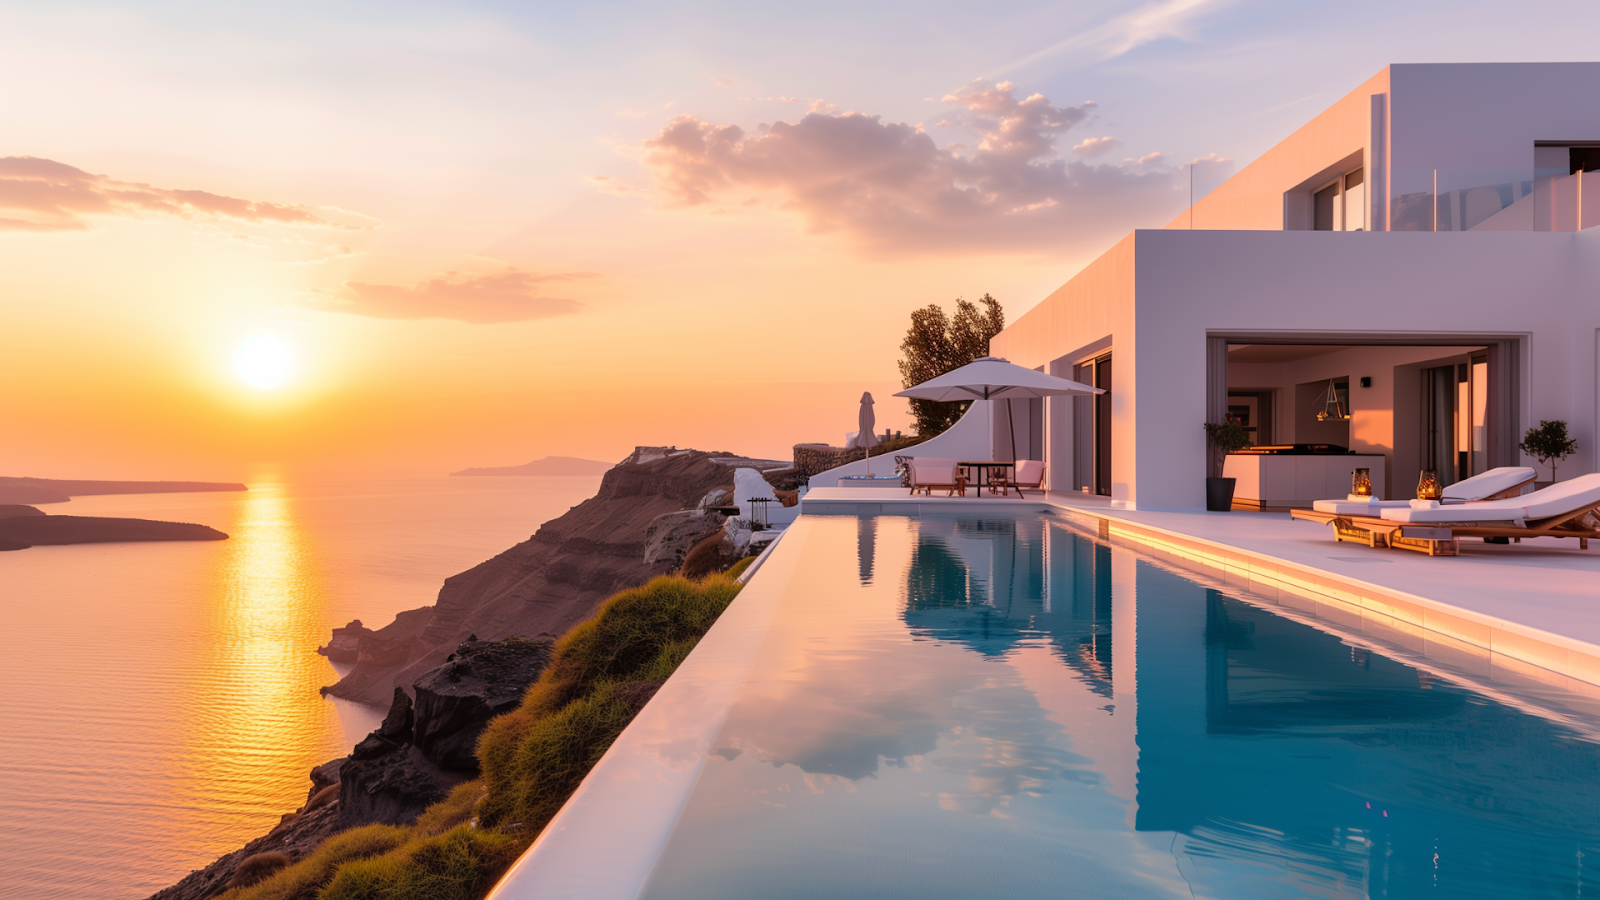 Warm sunrise illuminating a luxury villa in Santorini with a stunning view of the caldera.